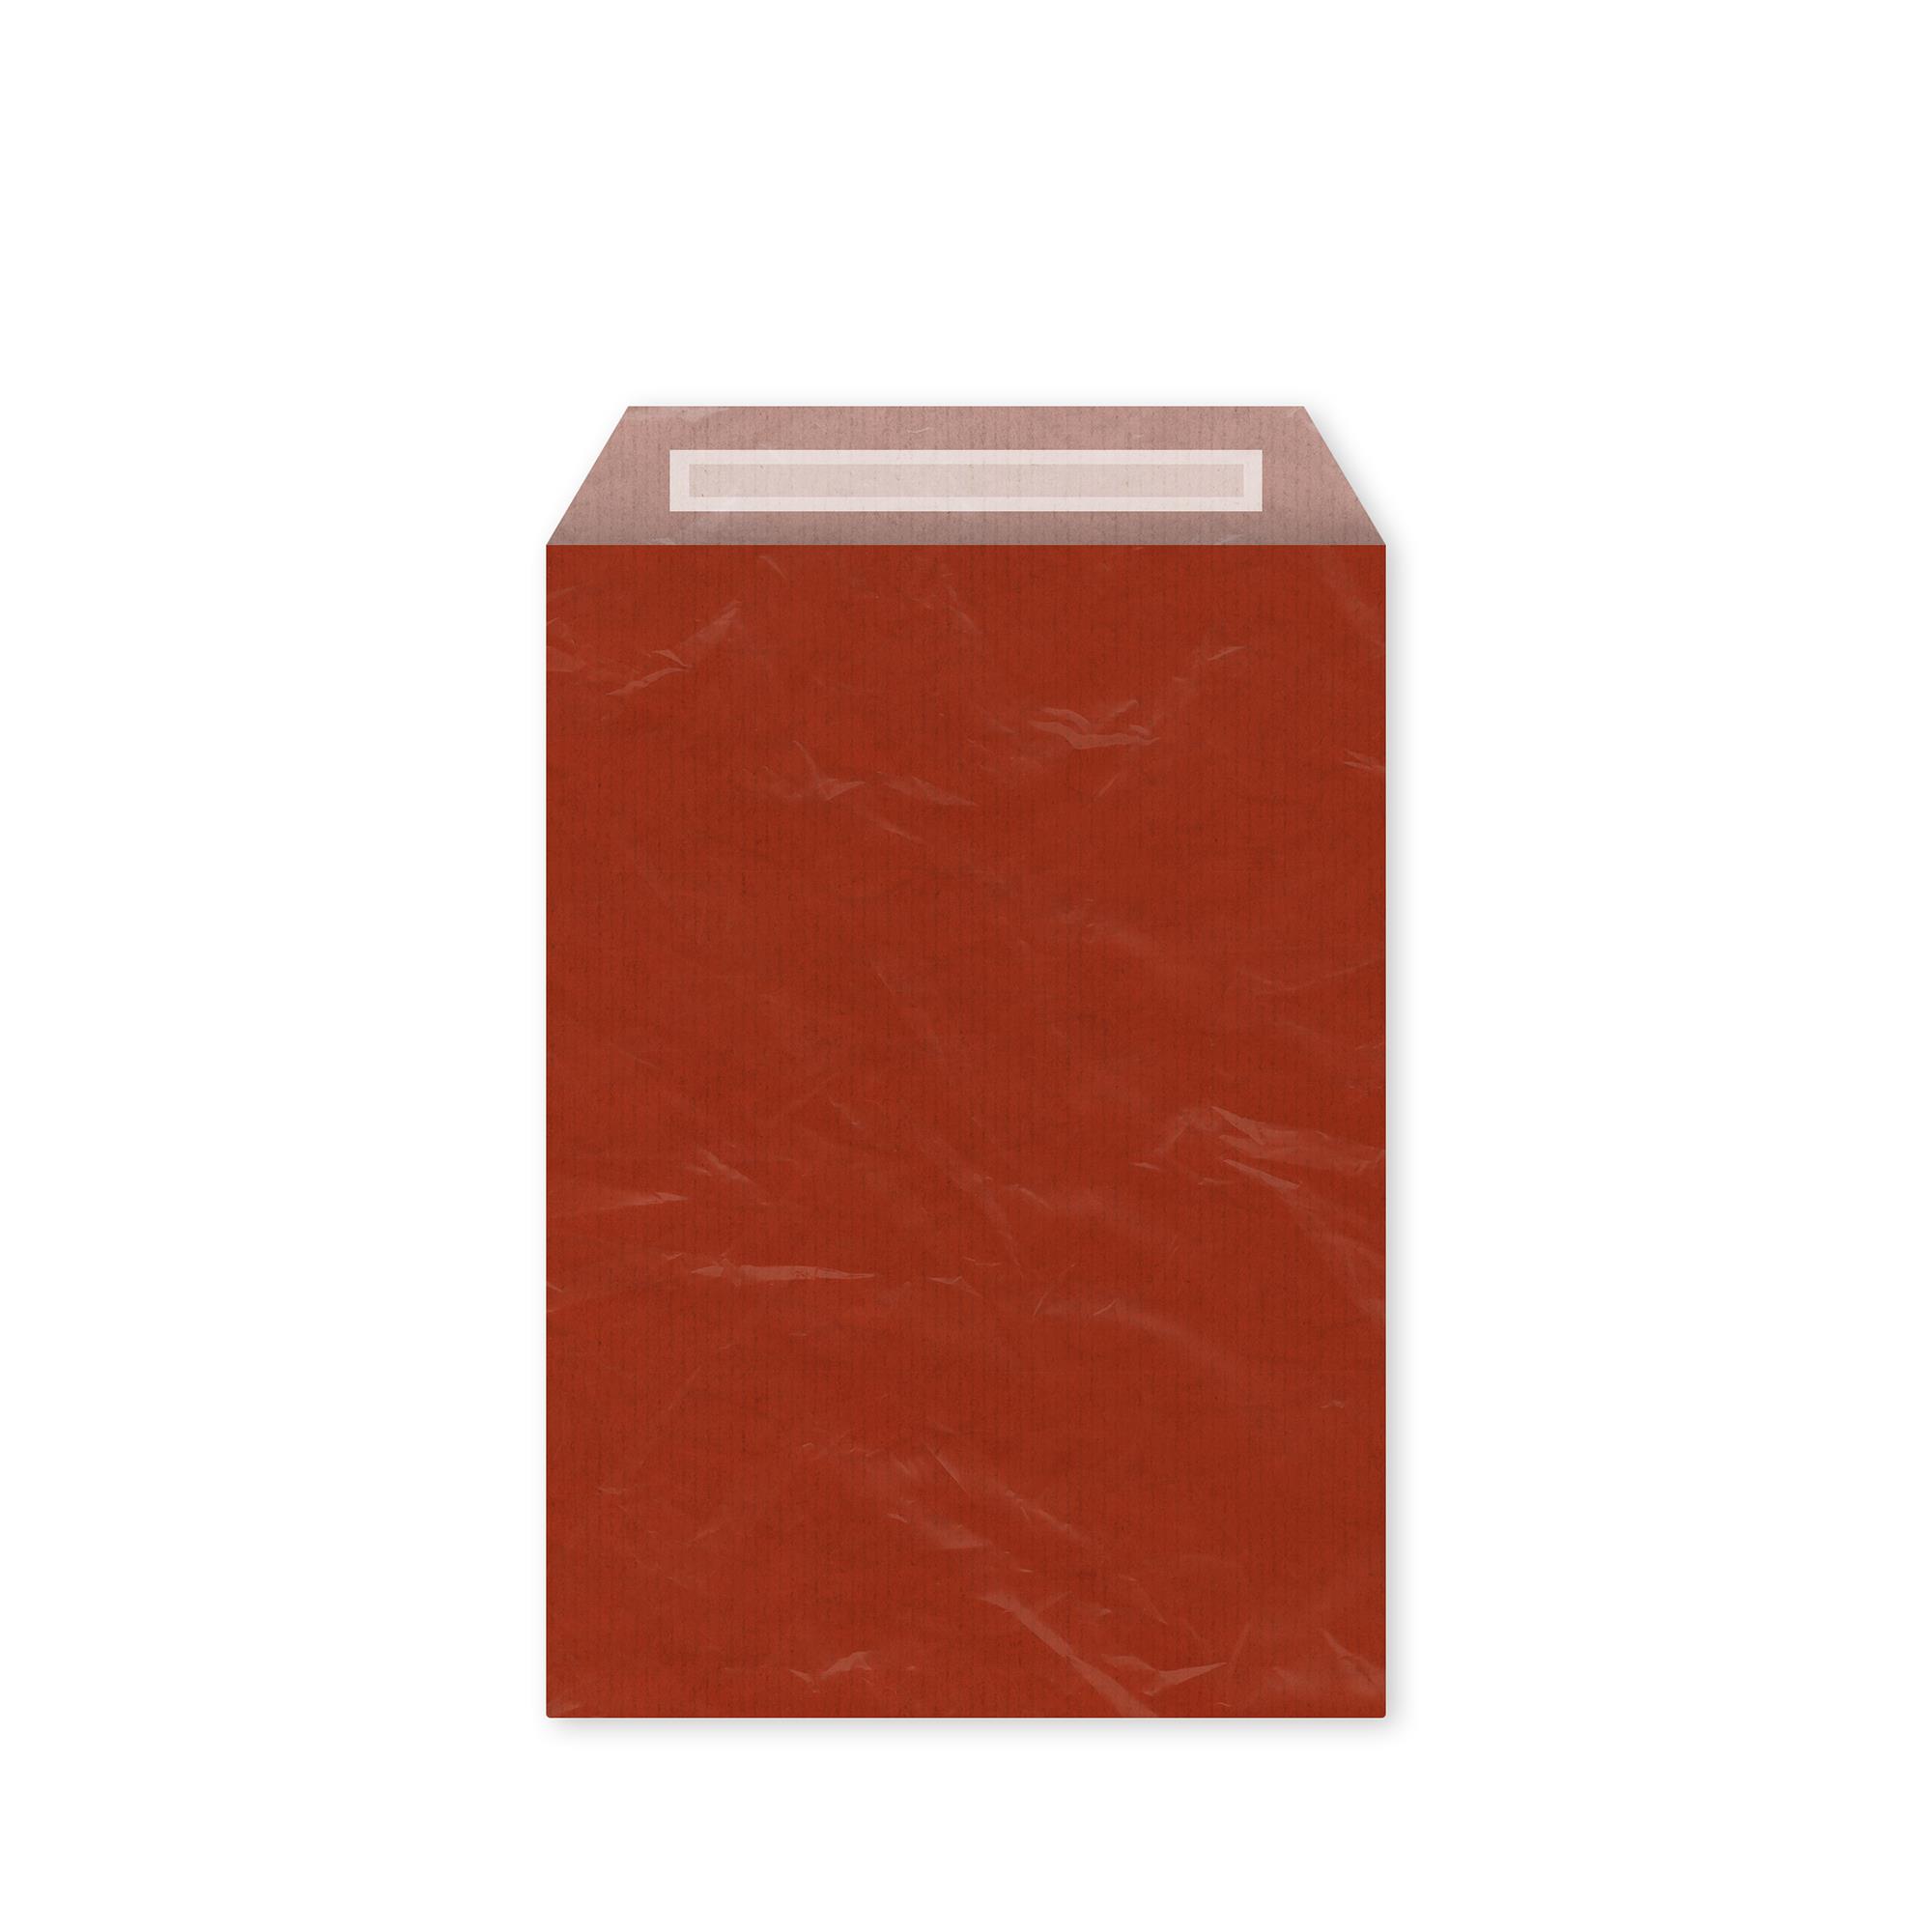 Bantlı Hediye Paketi Kağıt Kırmızı 20x6x25,5 cm - 25 Adet